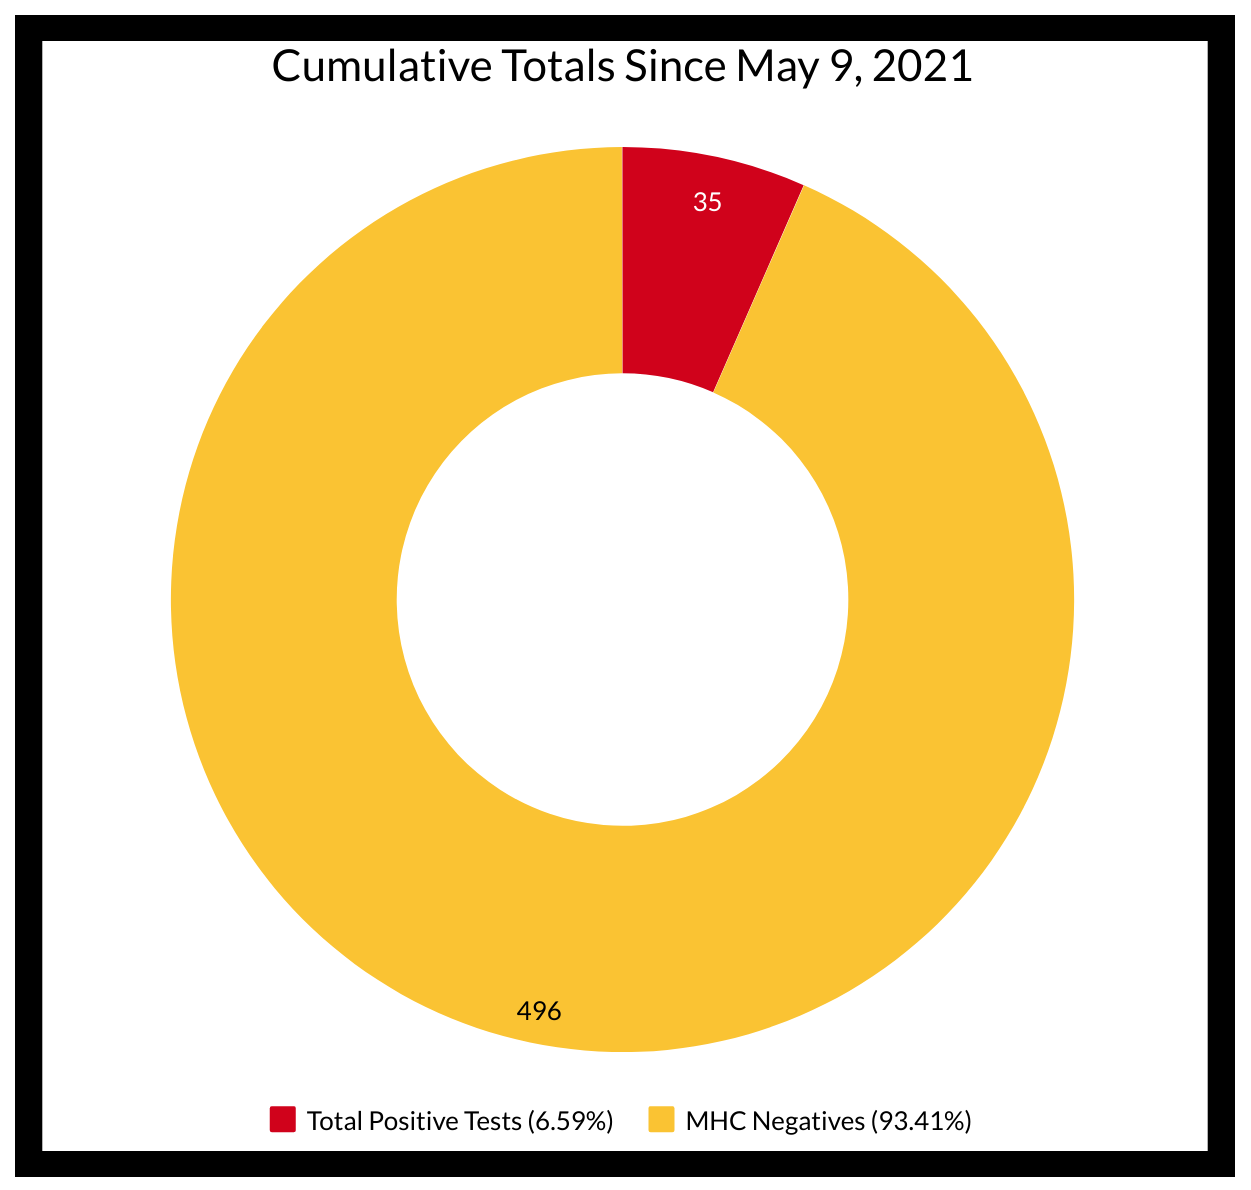 Cumulative Testing Data Since May 9, 2021